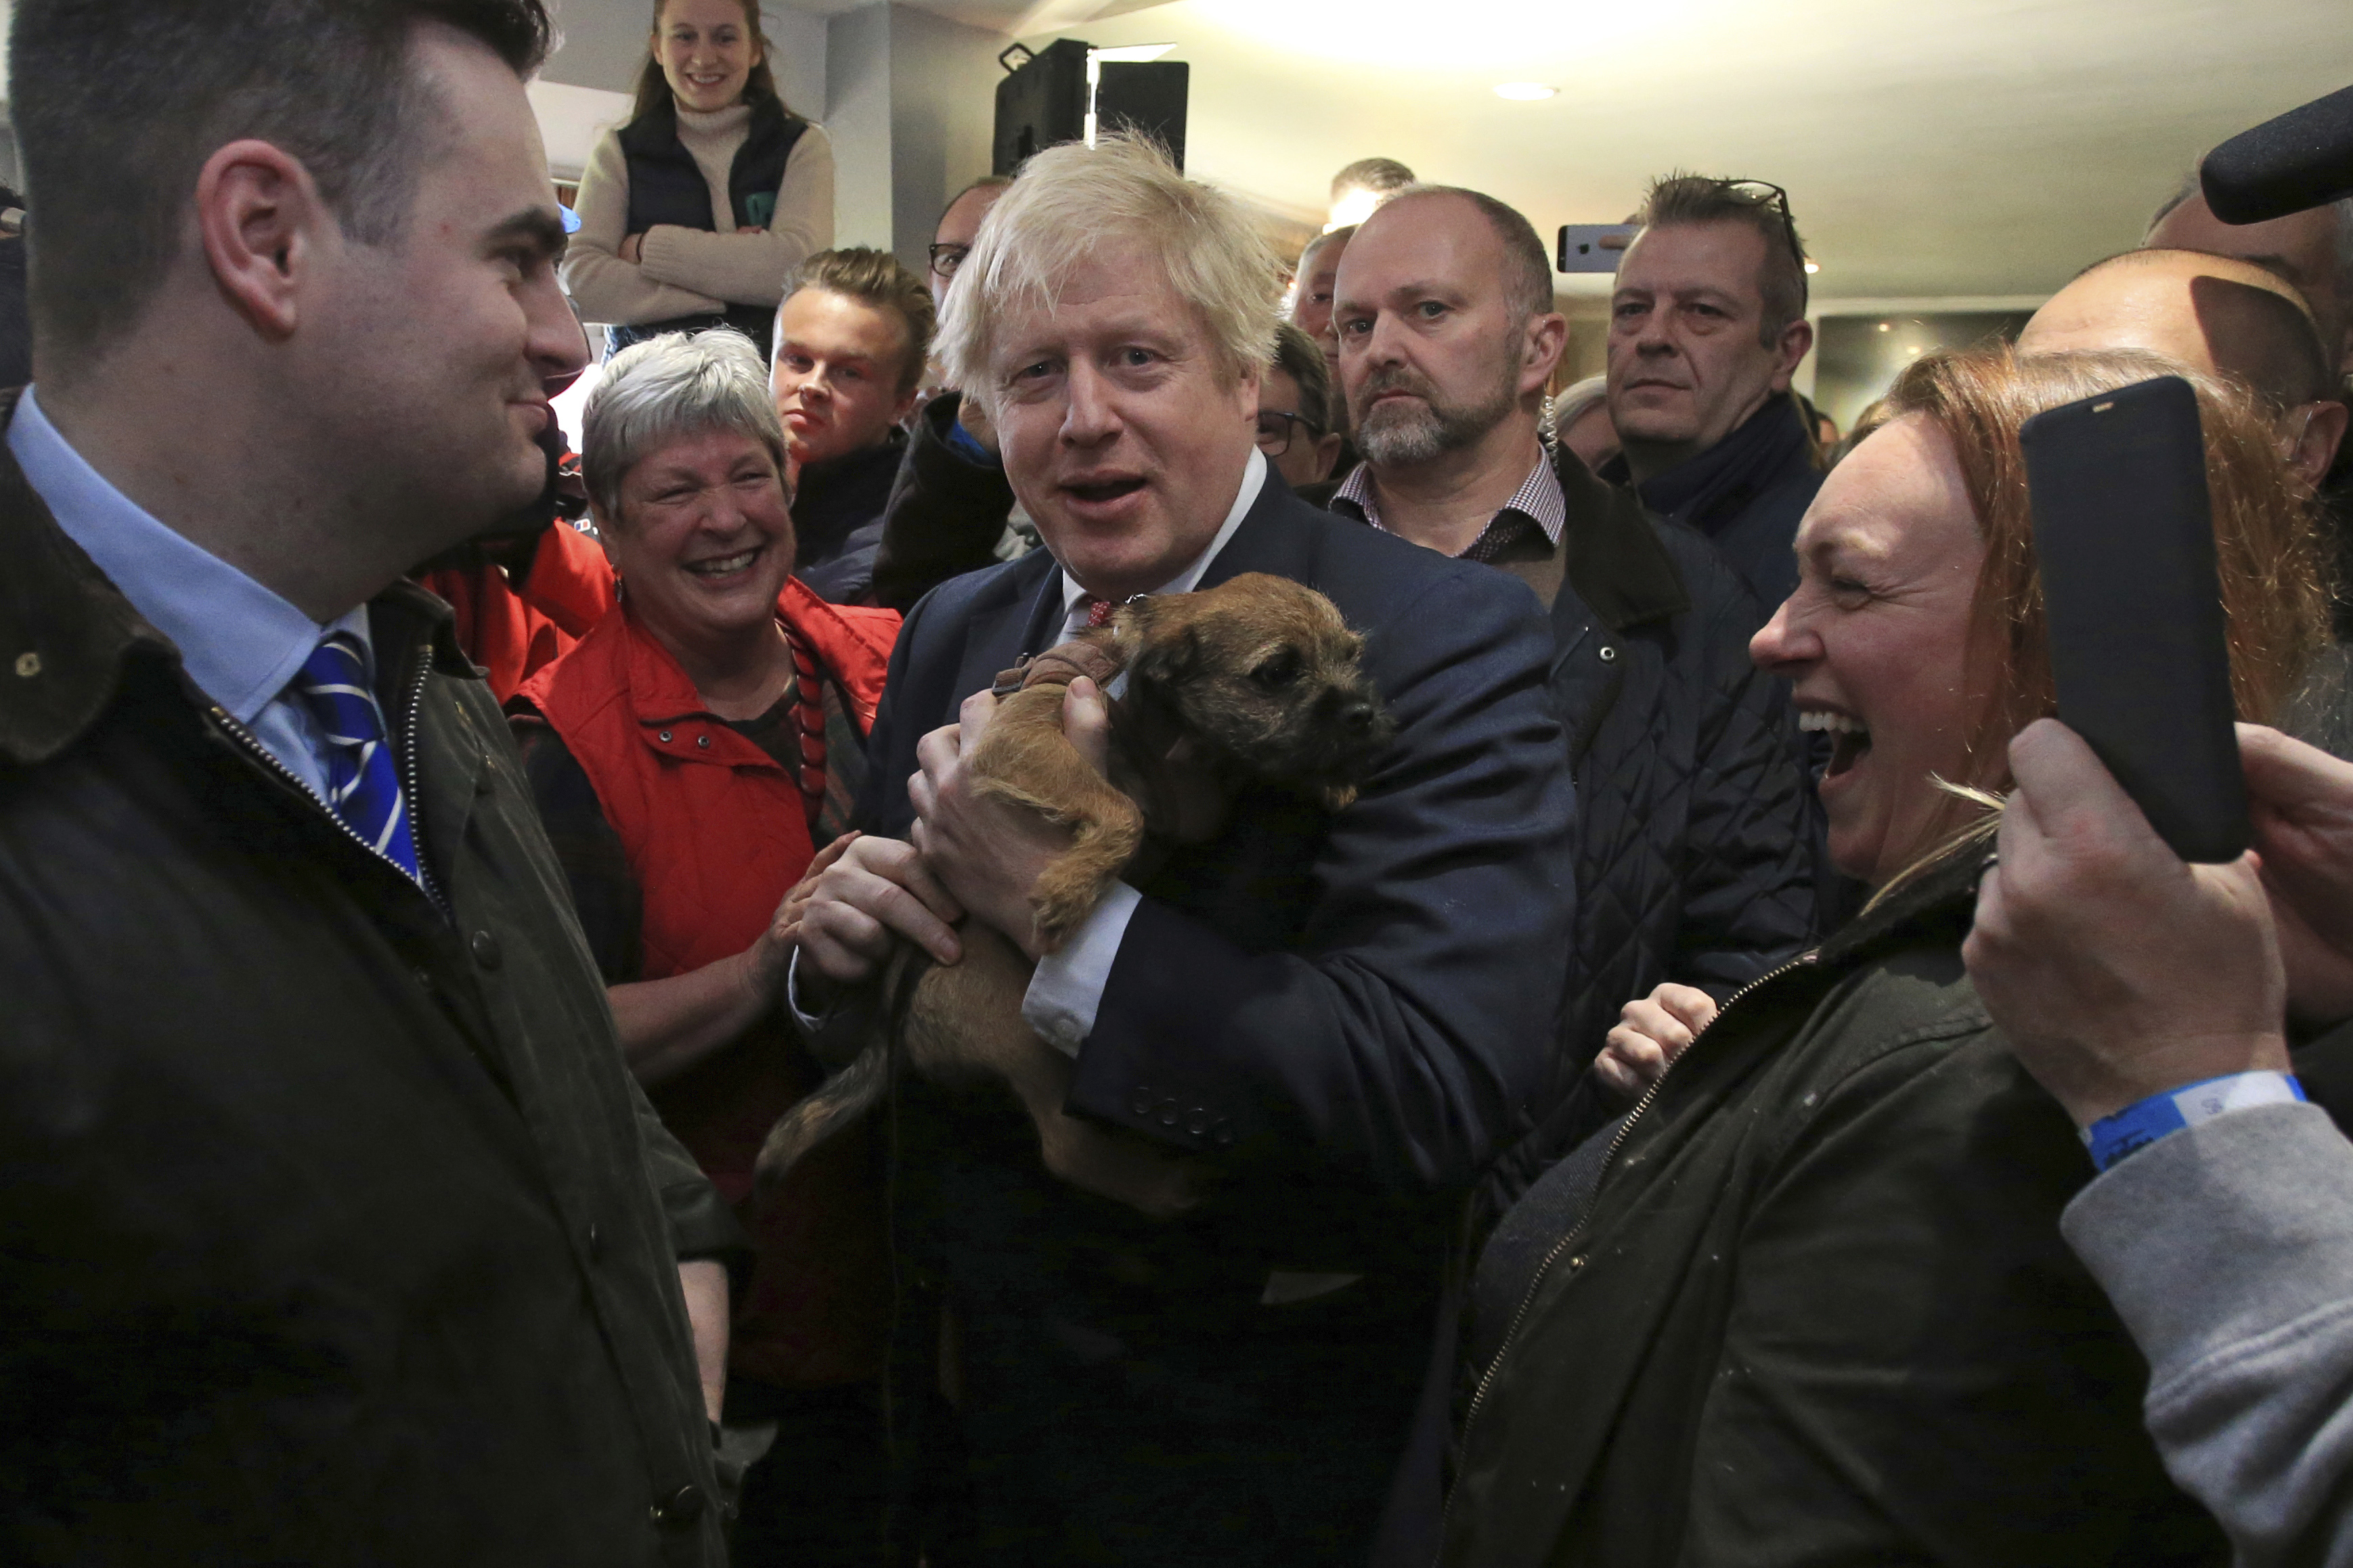 Boris promises people’s government